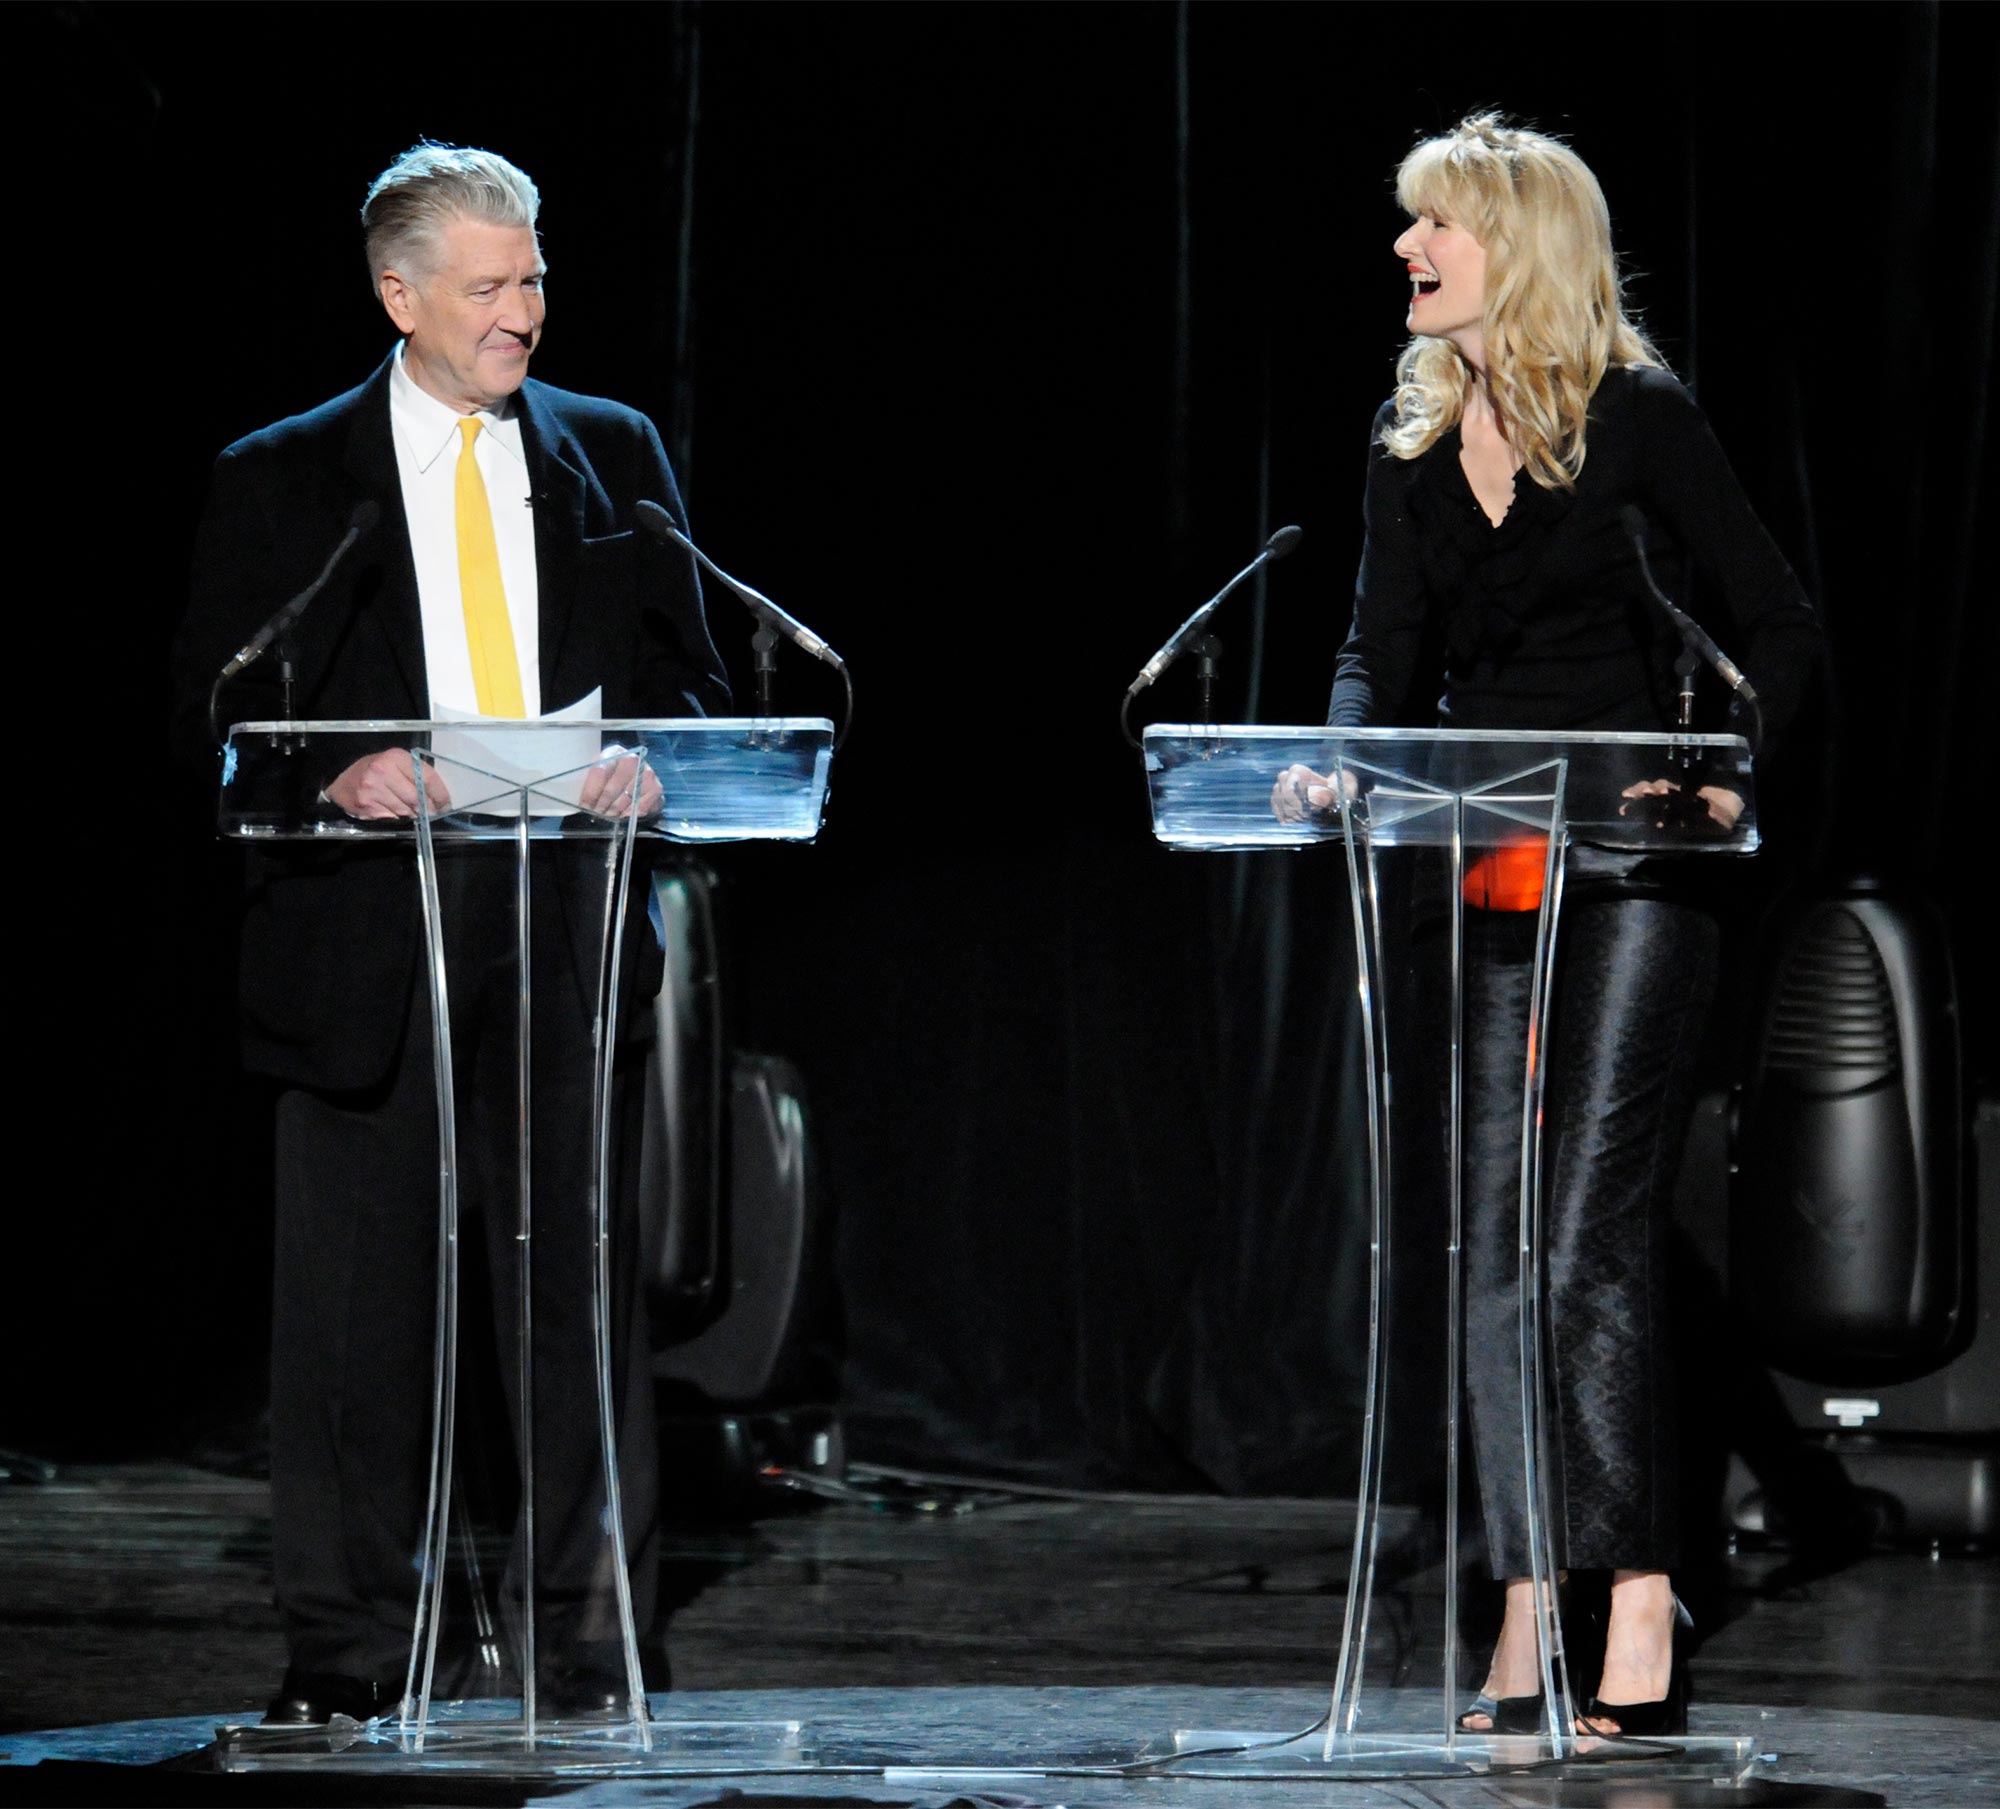 David Lynch and Laura Dern Speak at a David Lynch Foundation Event